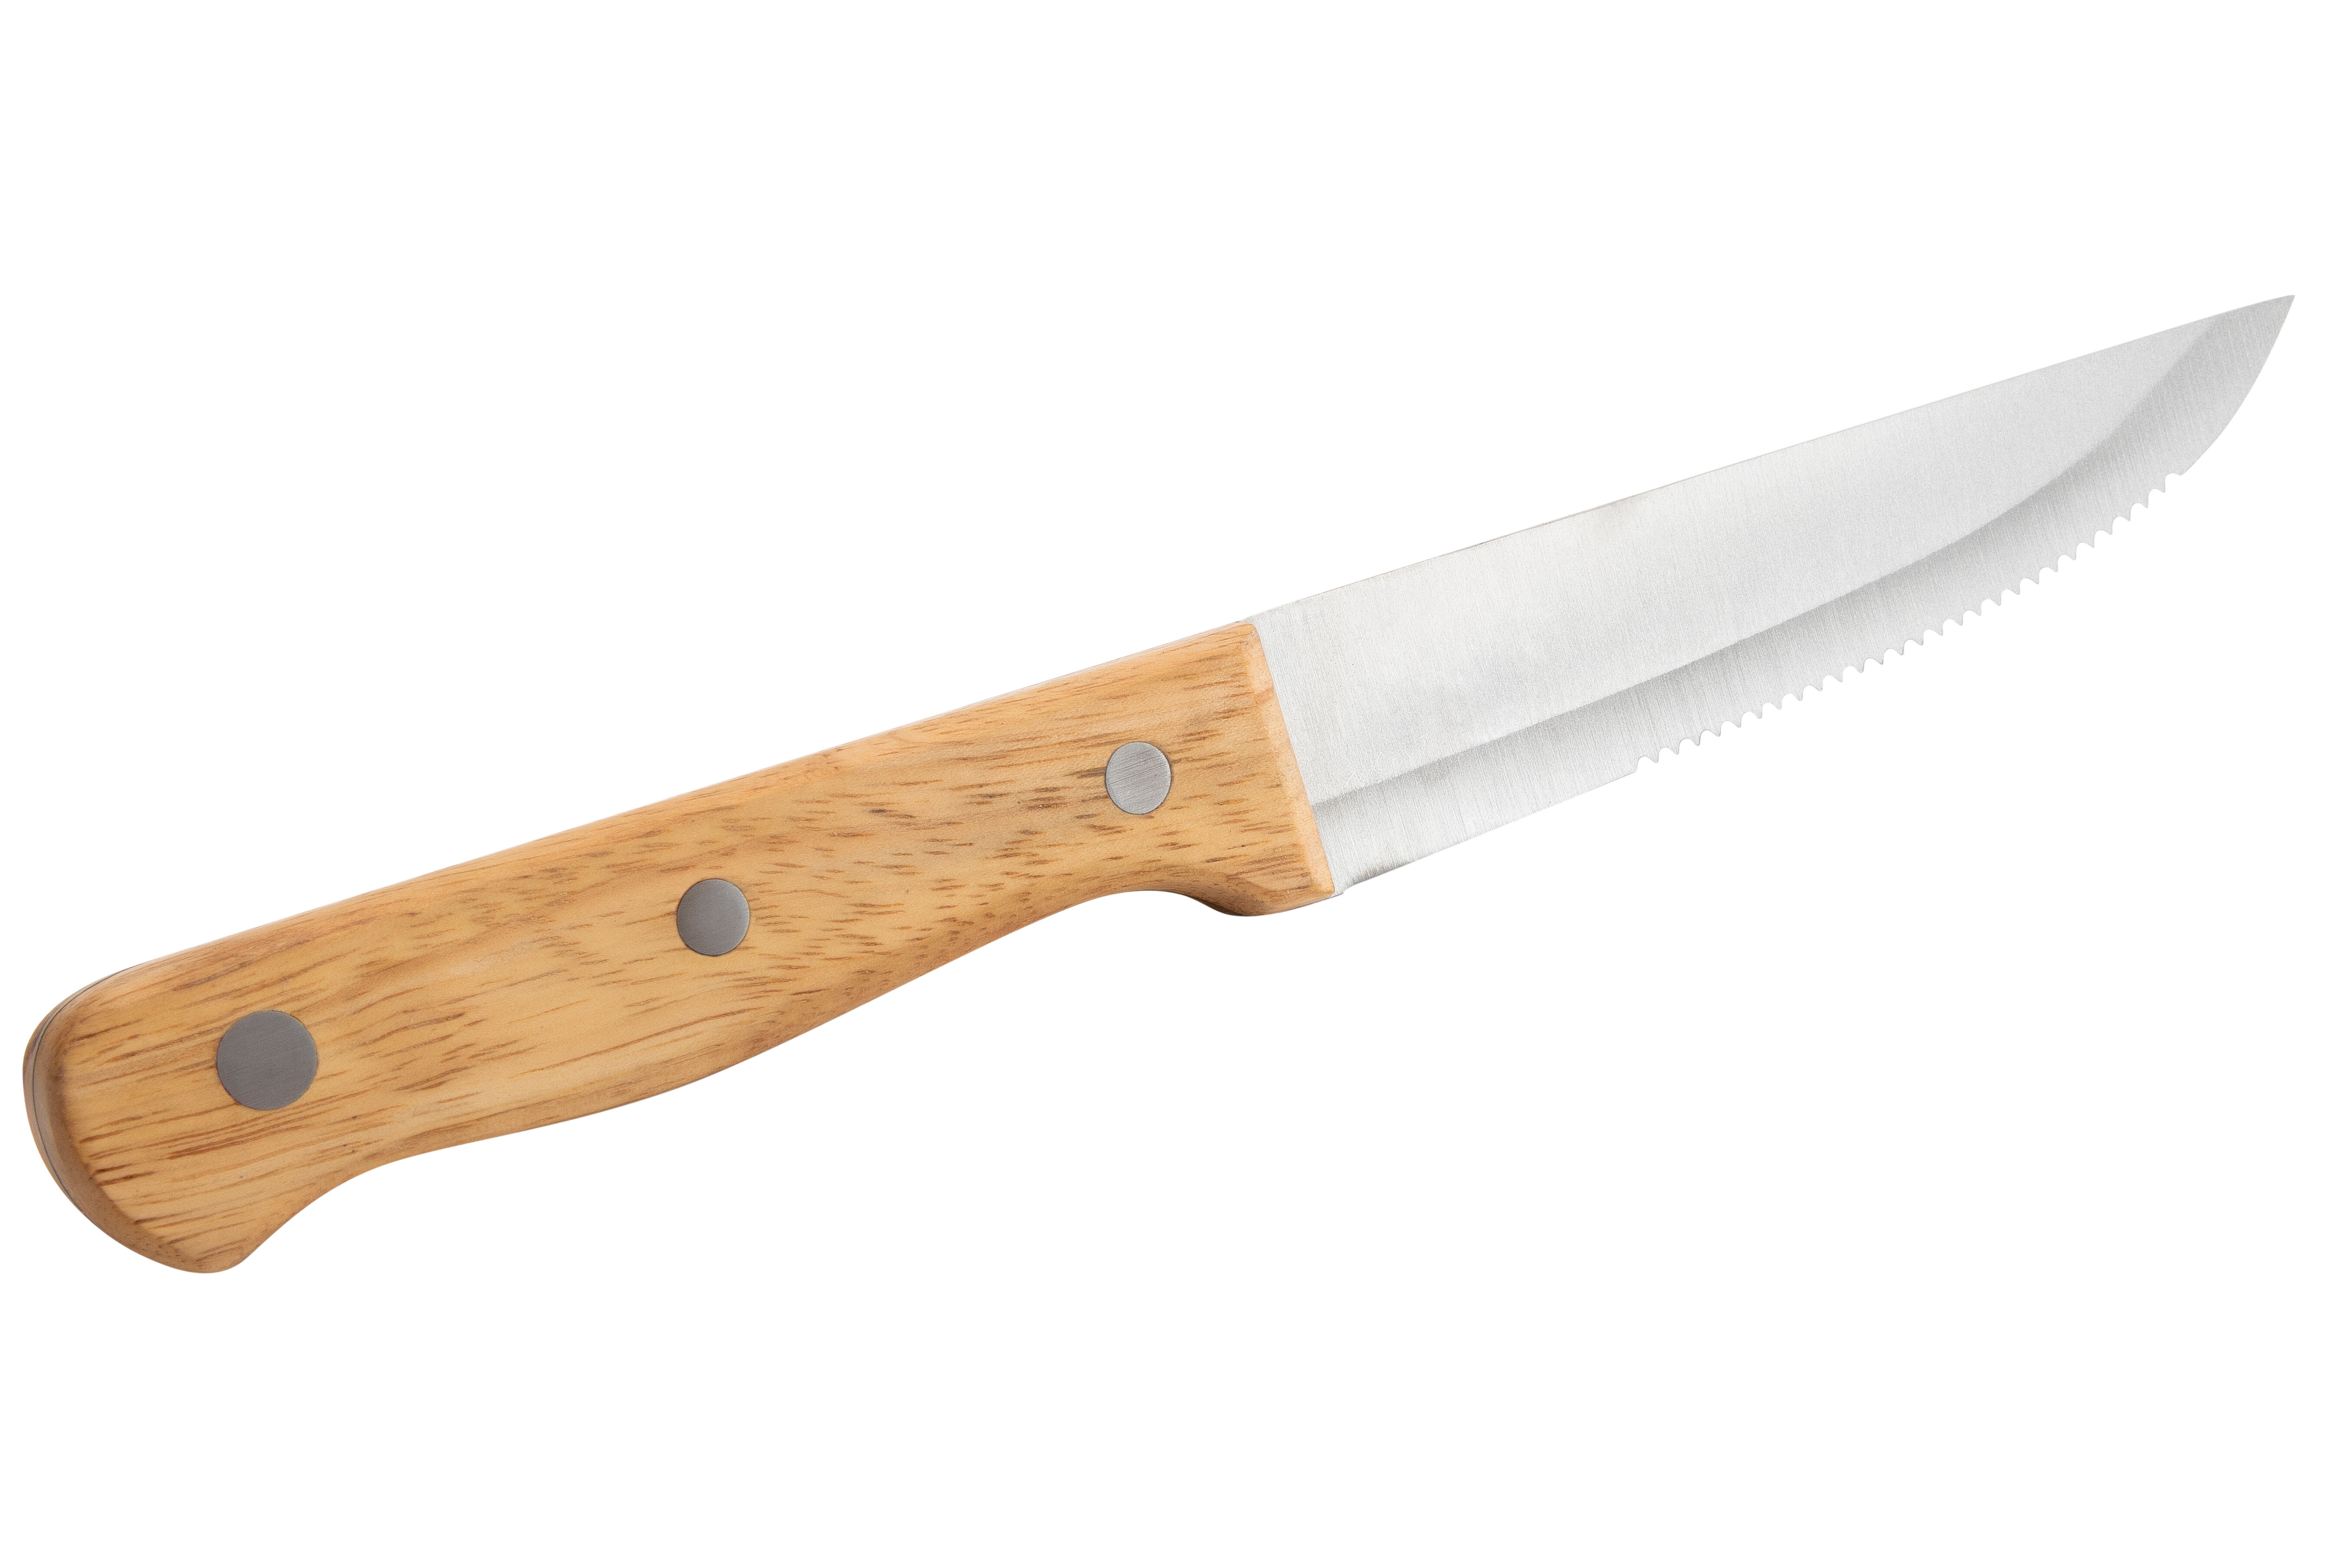 SET OF 4 - 5-Inch Blade Restaurant Style Steak Knives, Round Tip,  Thick-Grip Wood Handle Steak Knife Set